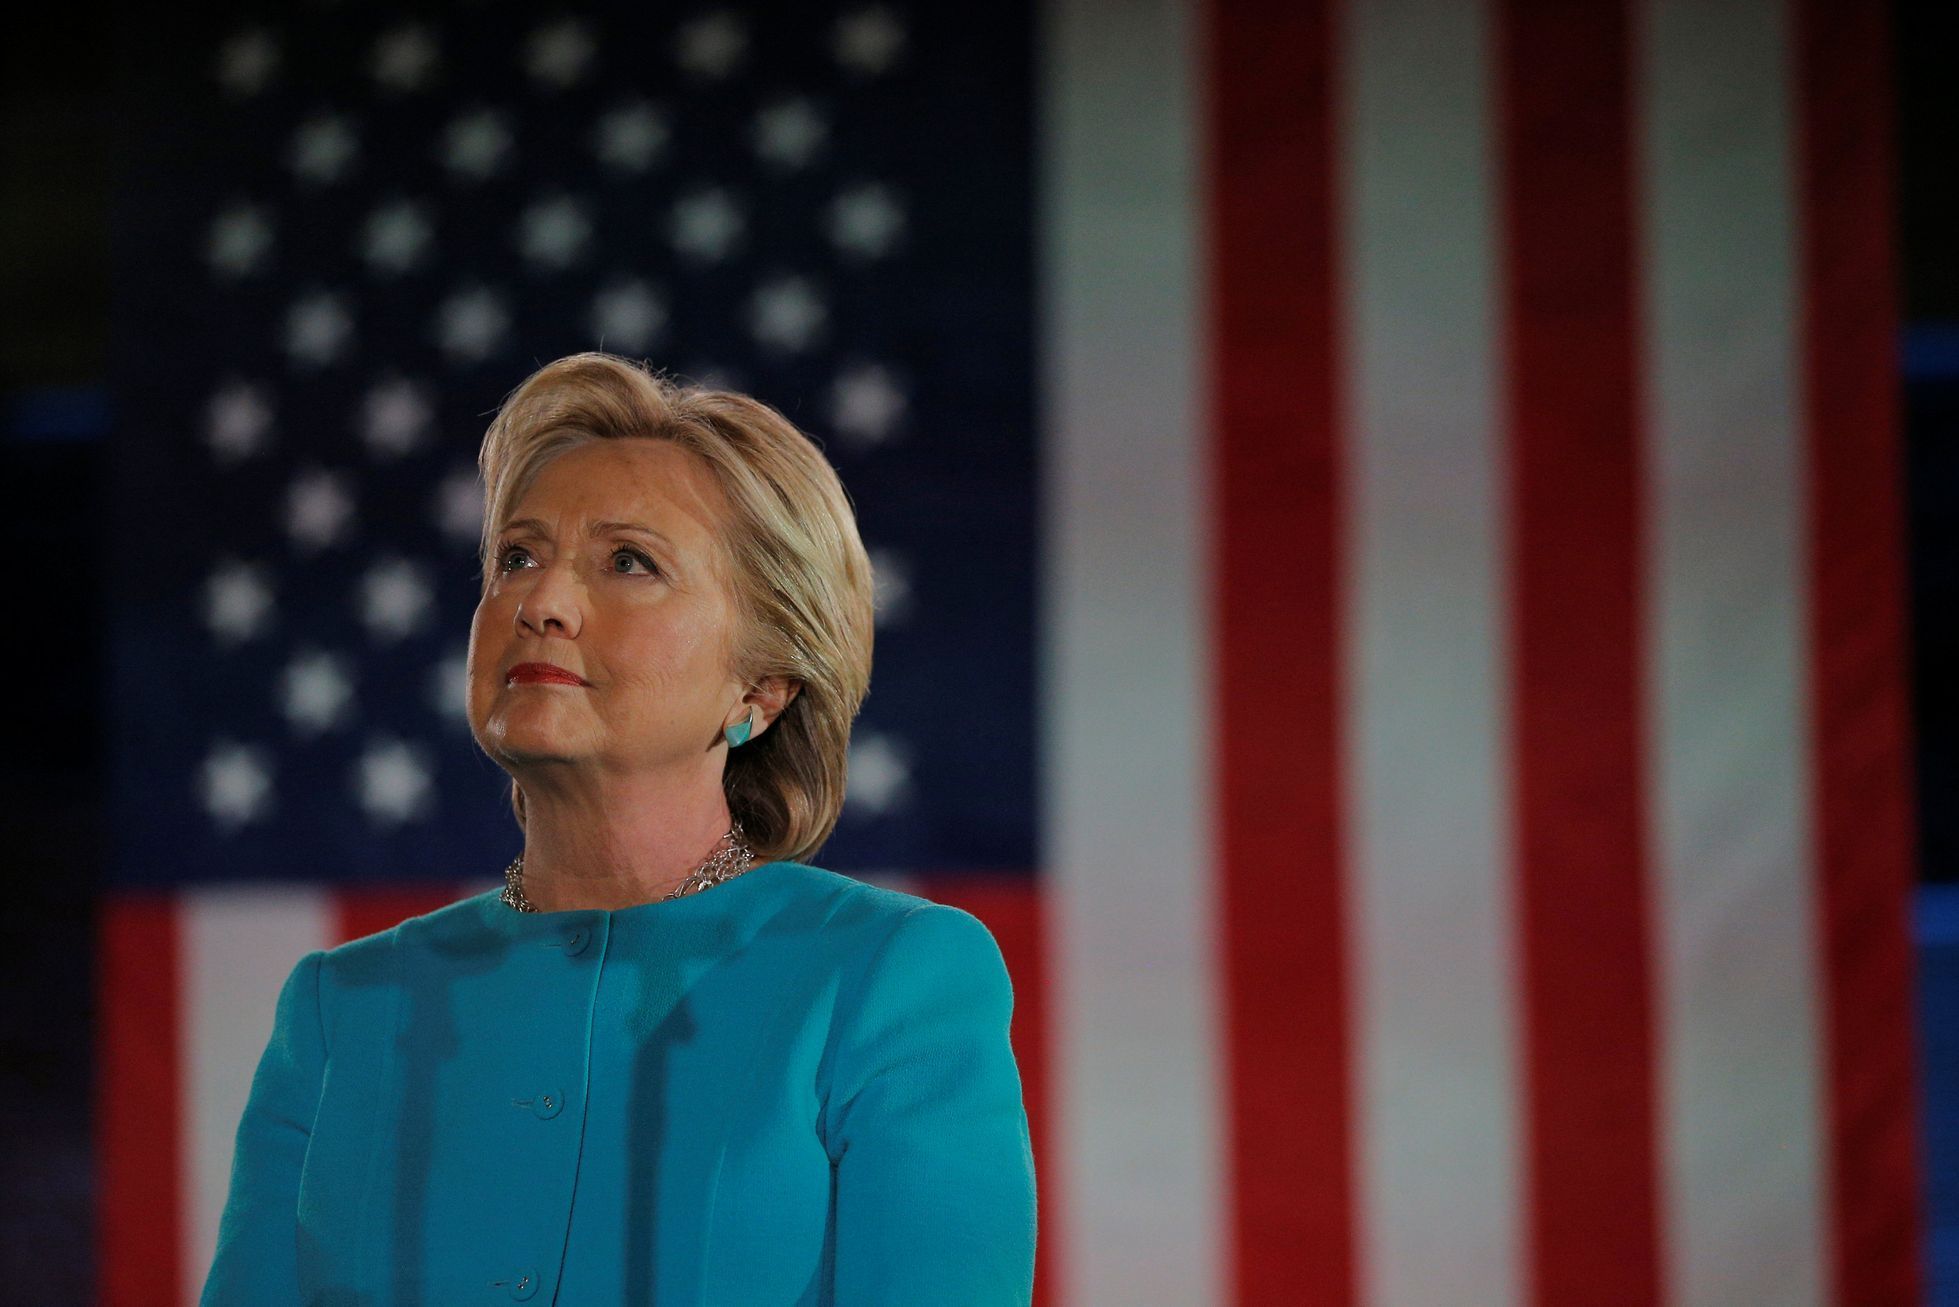 Hillary Clintonová - Americké volby 2016